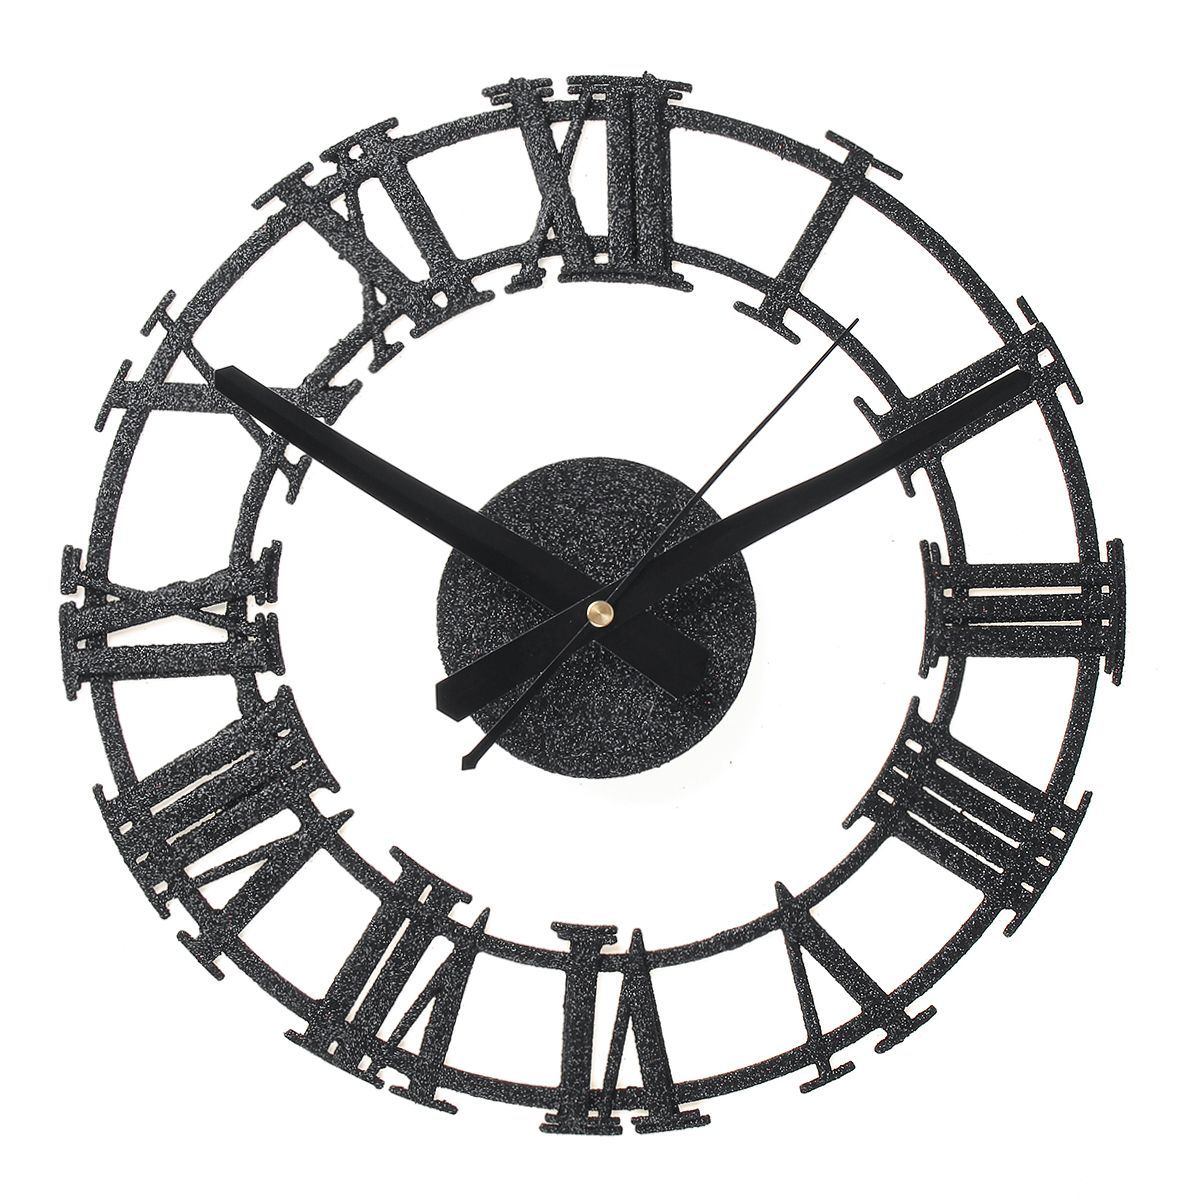 12-Wall-Decor-Clock-European-Vintage-Clock-Large-Roman-Numerals-Home-Decor-1682699